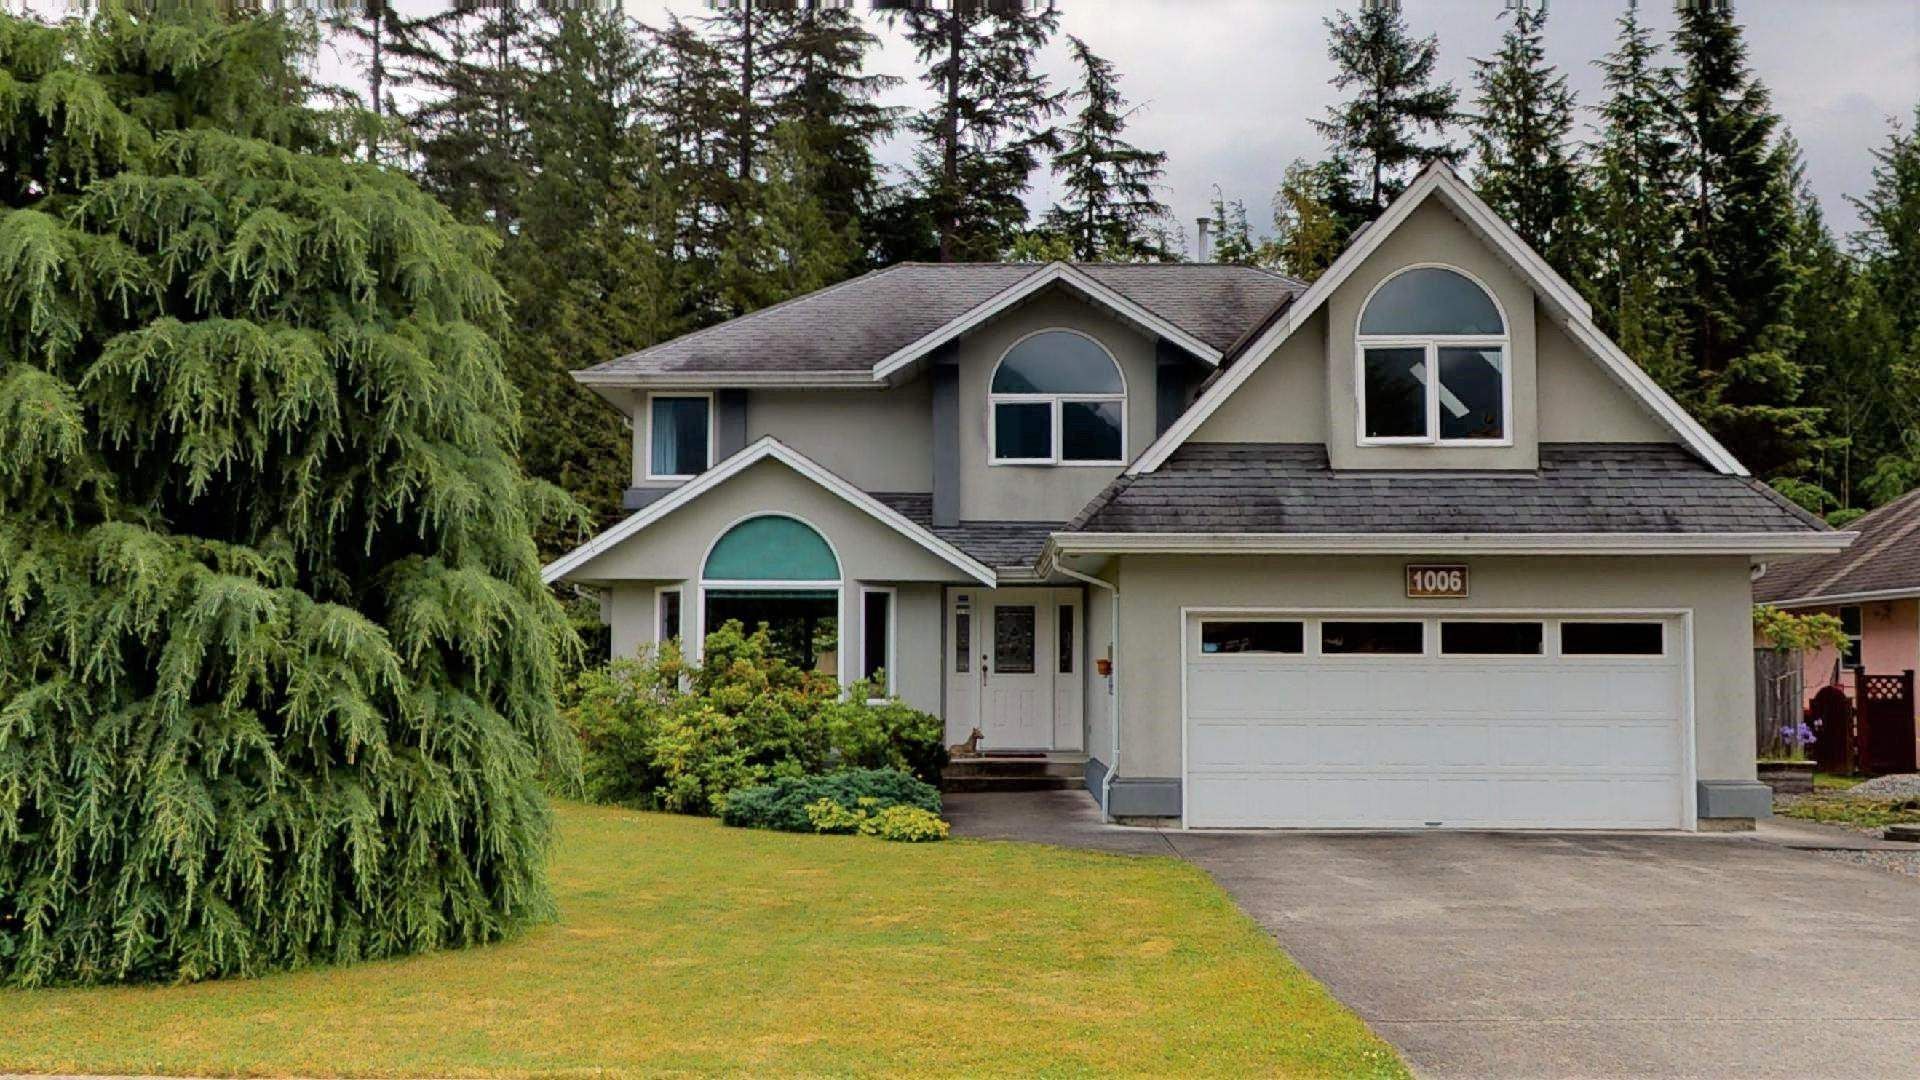 Main Photo: 1006 REGENCY Place in Squamish: Garibaldi Estates House for sale : MLS®# R2595112